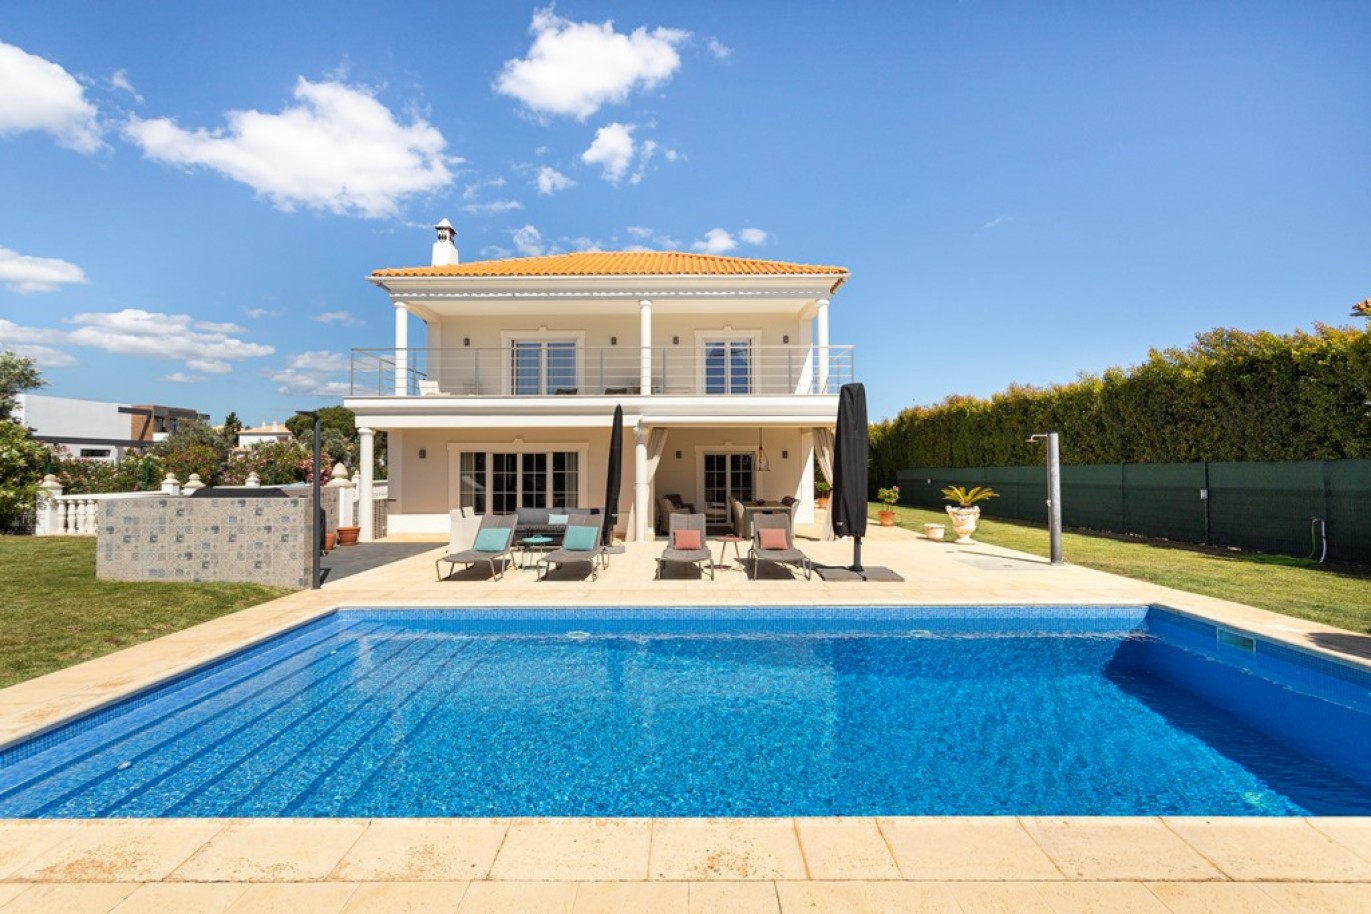 Moradia V5 com piscina, para venda em Vilamoura, Algarve_264470